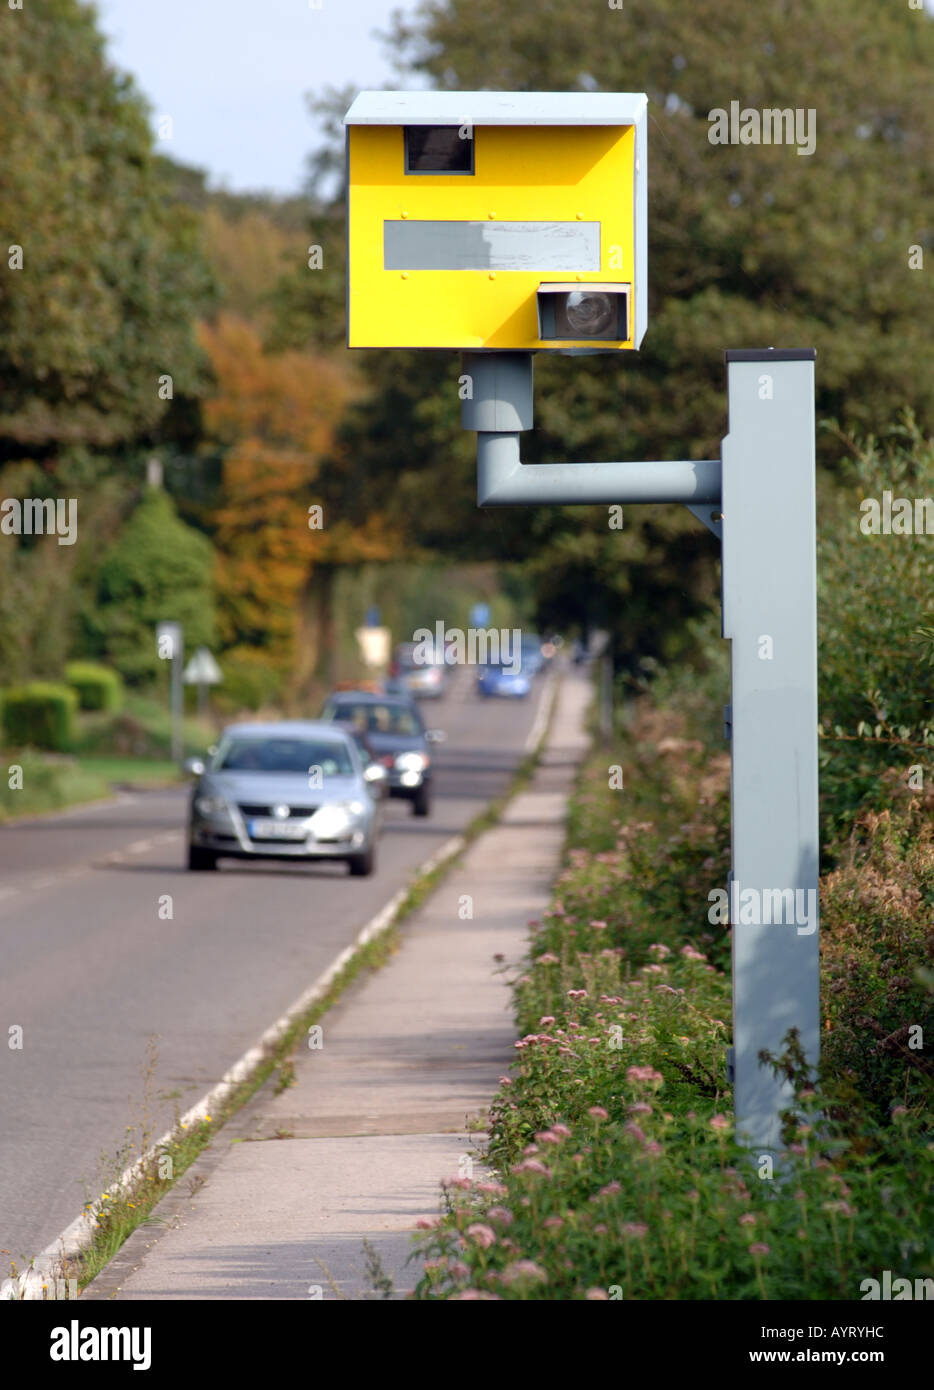 Geschwindigkeit Kamera, England, UK Stockfoto